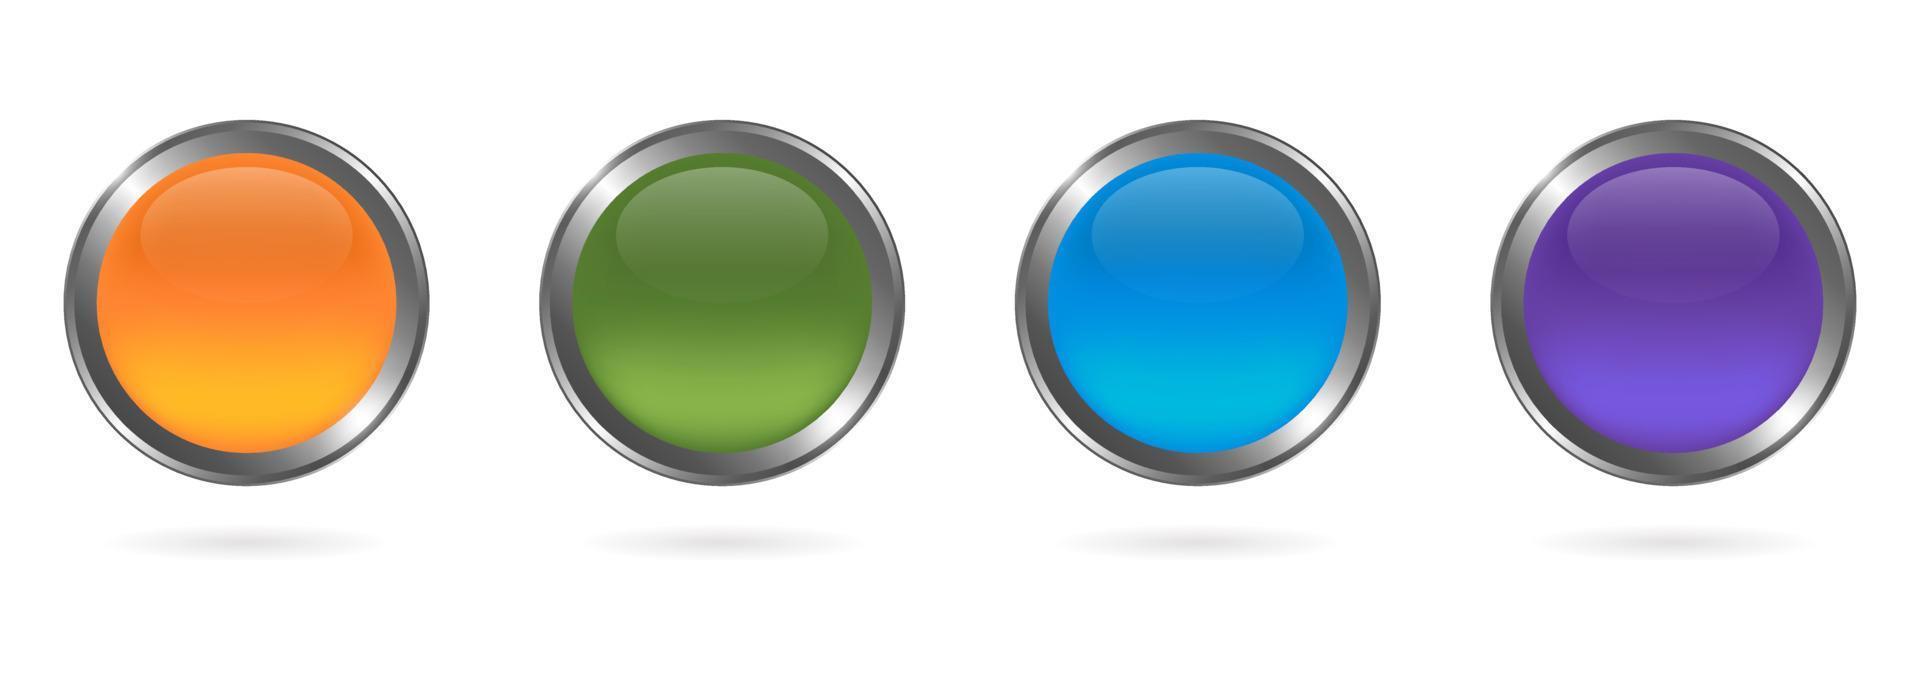 Conjunto de botón redondo de colores de vidrio con marco plateado vector